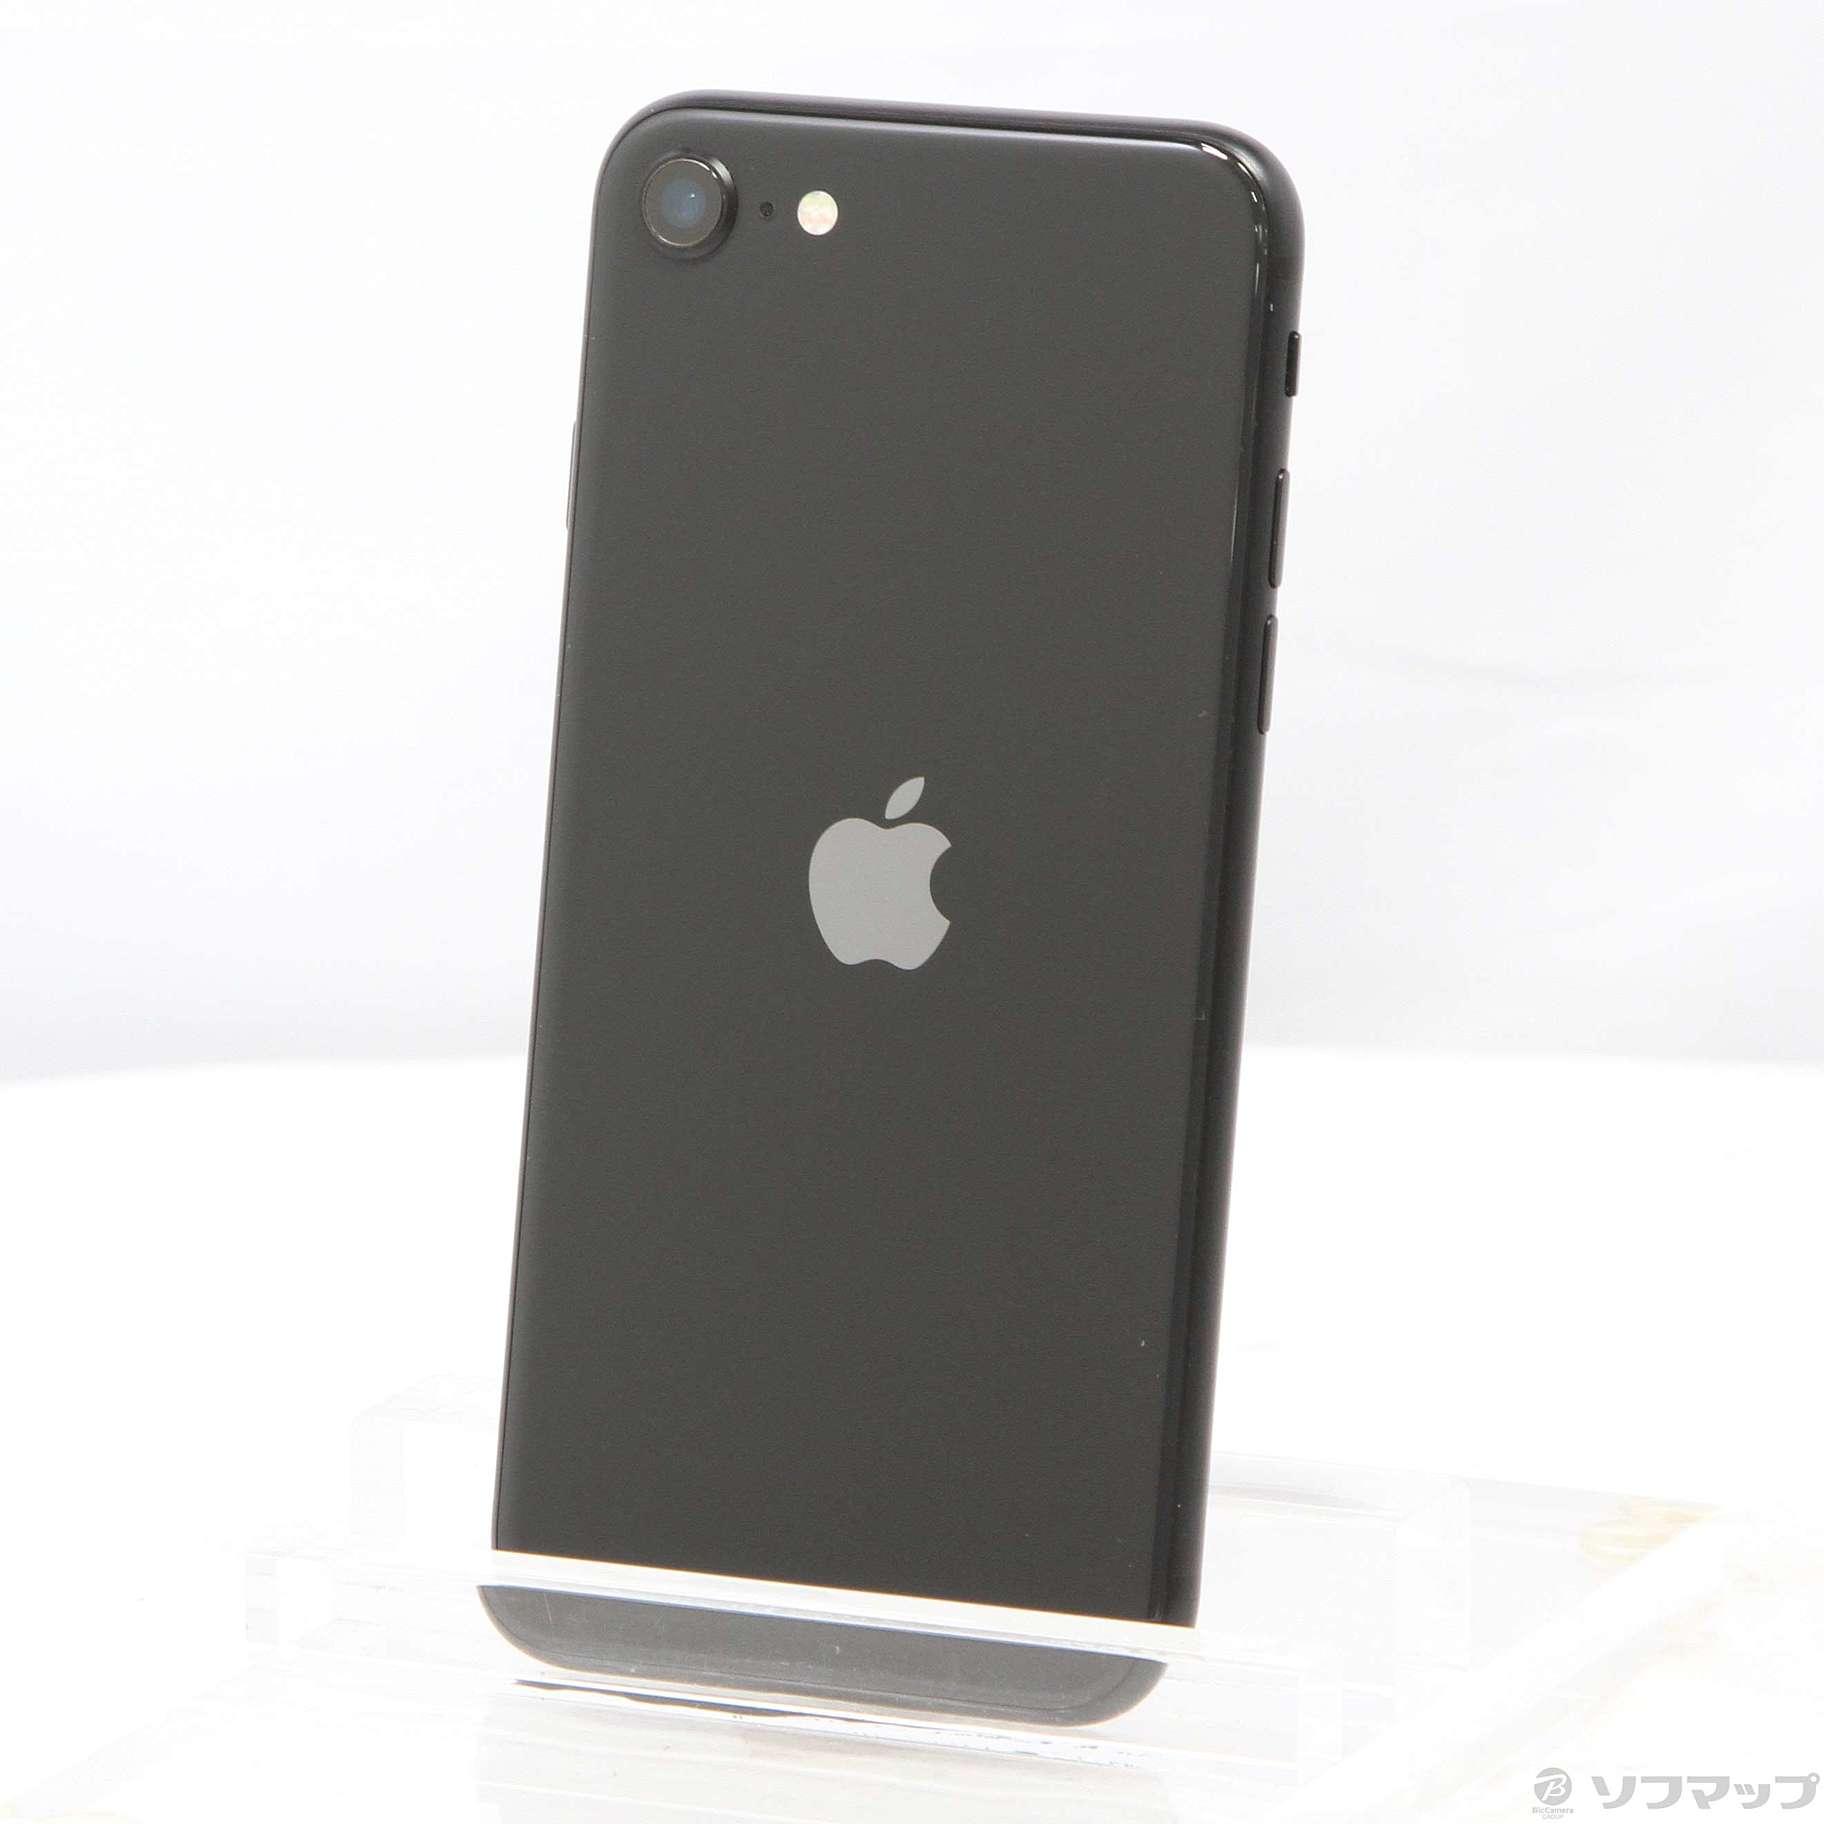 Apple iPhone SE 第2世代 64GB ブラック MHGP3J/A - www.sorbillomenu.com